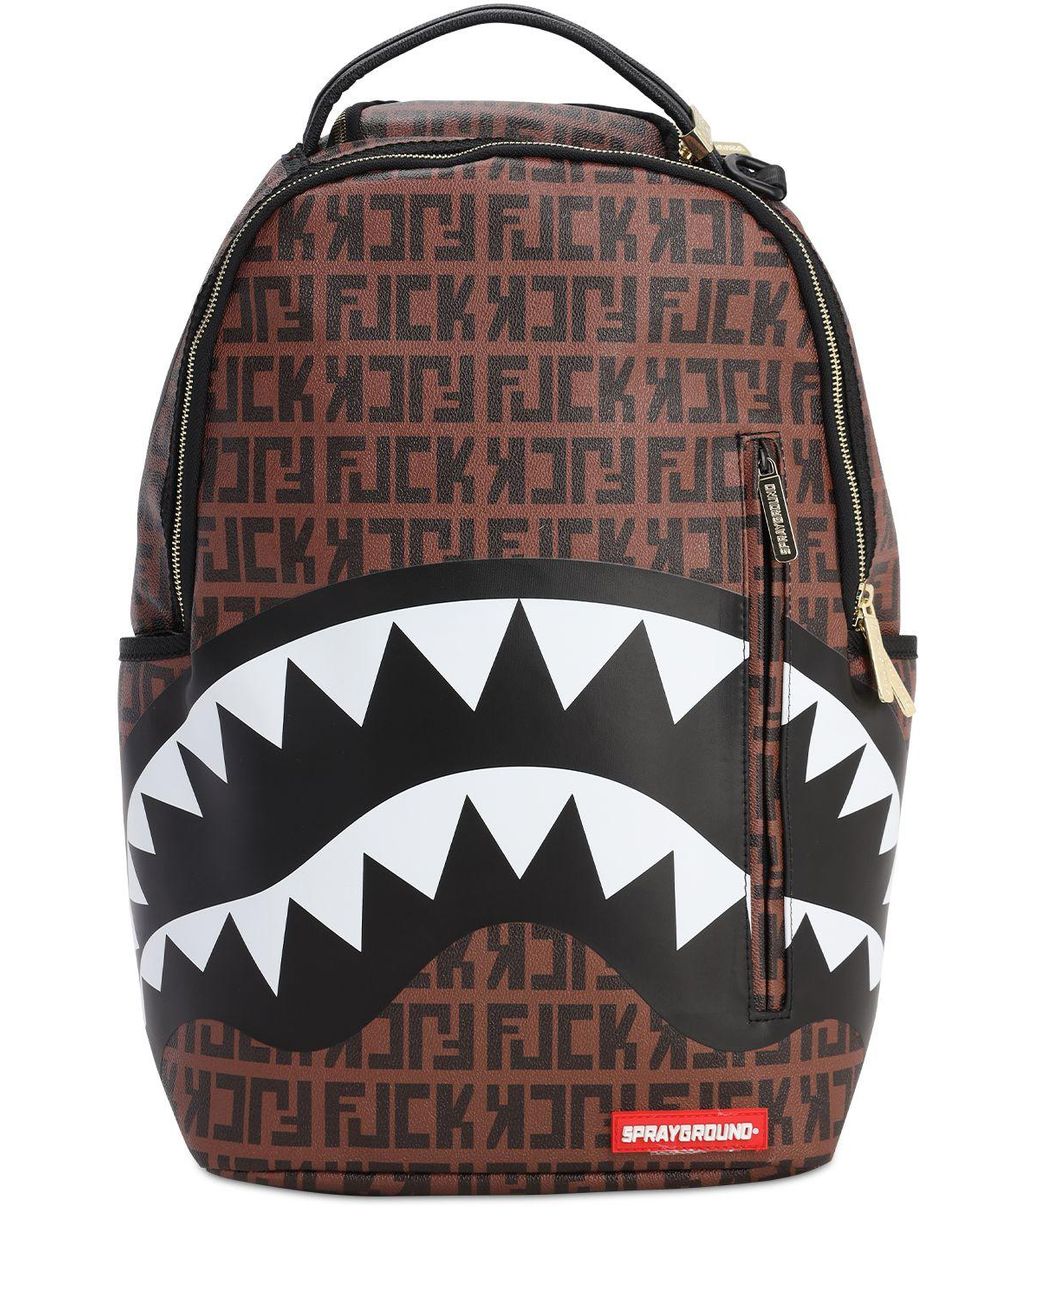 Sprayground Offended Shark Backpack (Brown) 2185-BRN